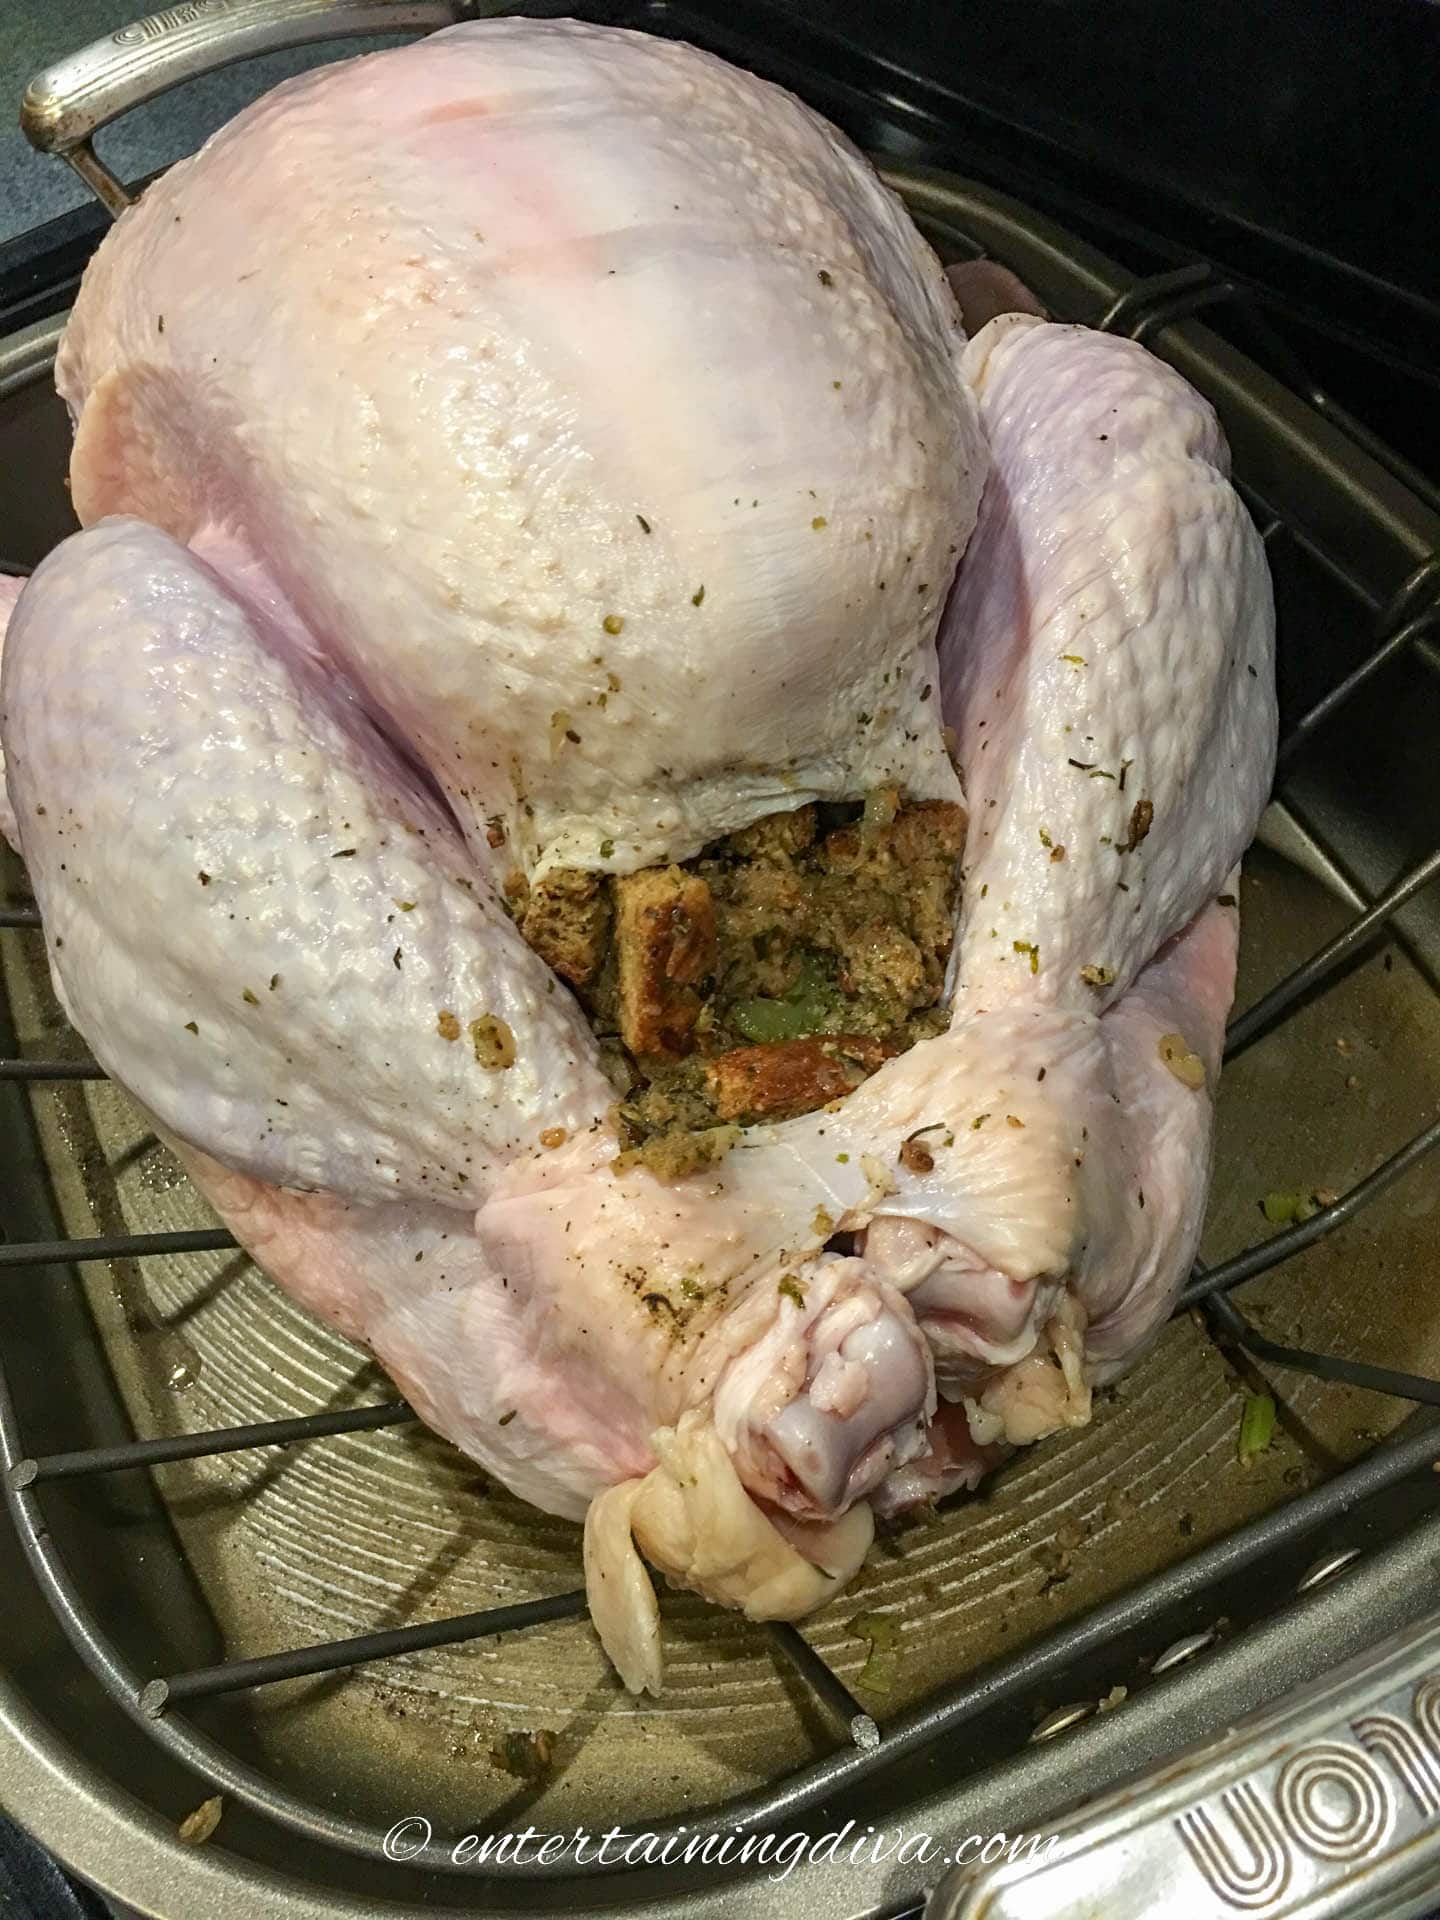 Turkey with legs tied